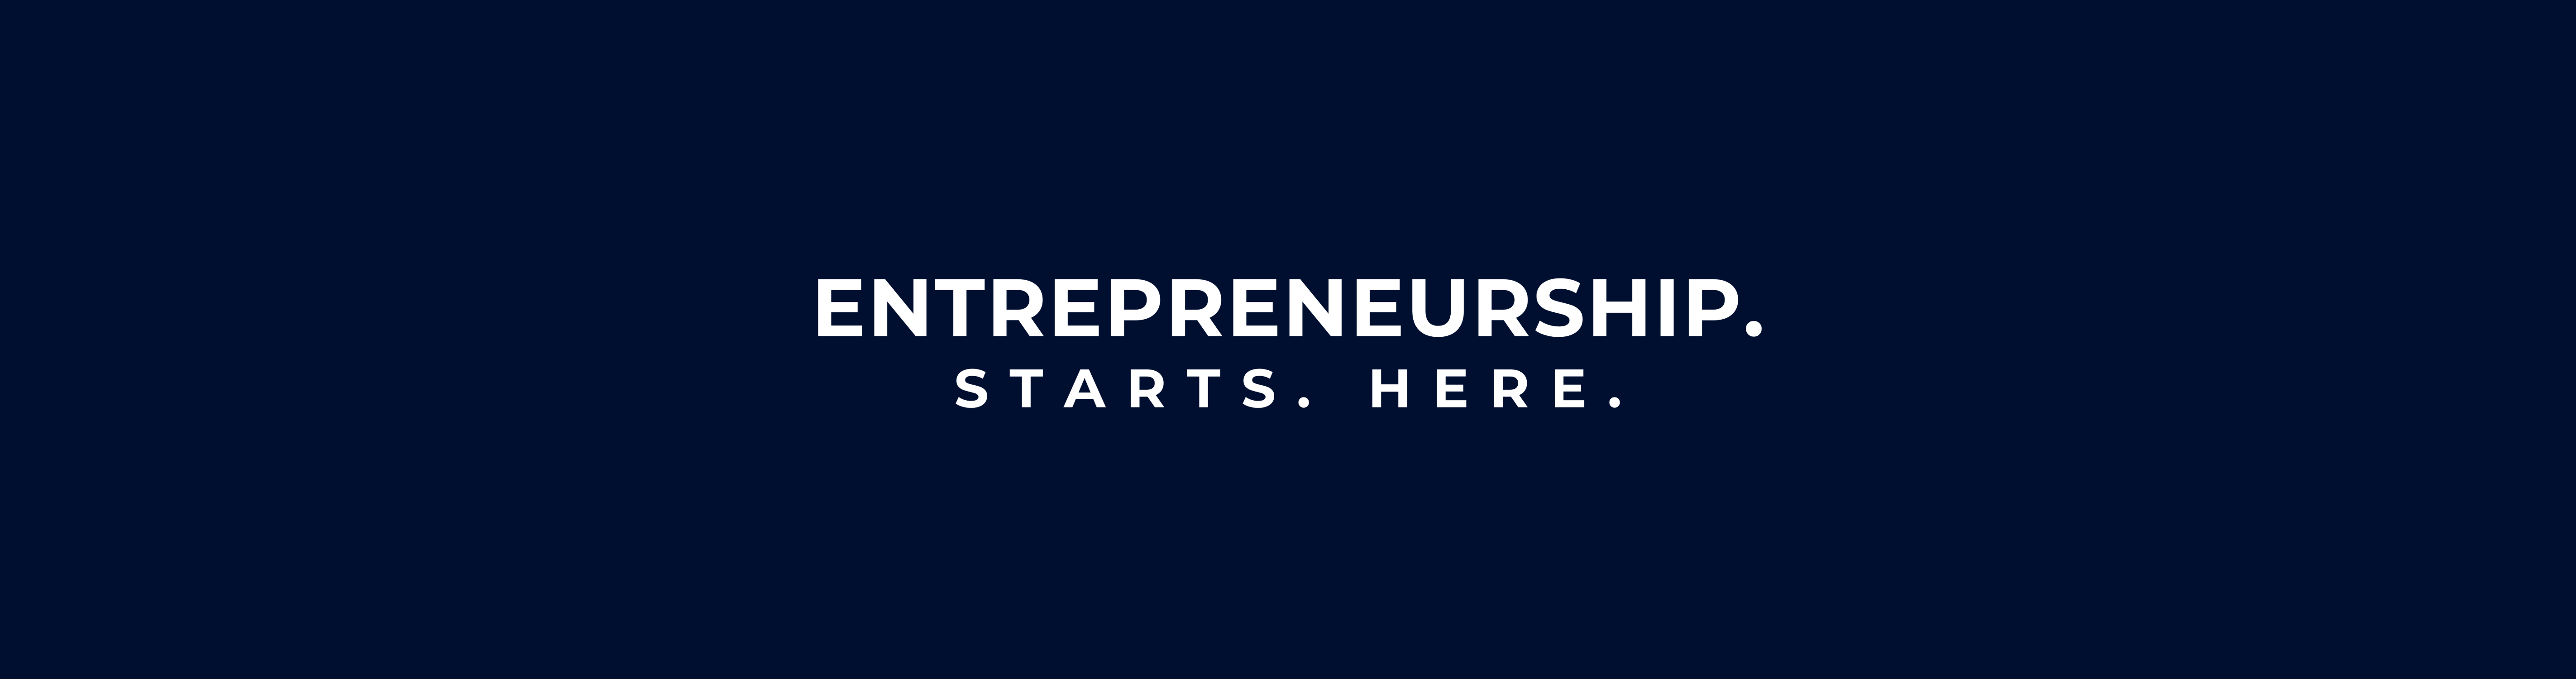 tagline entrepreneurship starts here